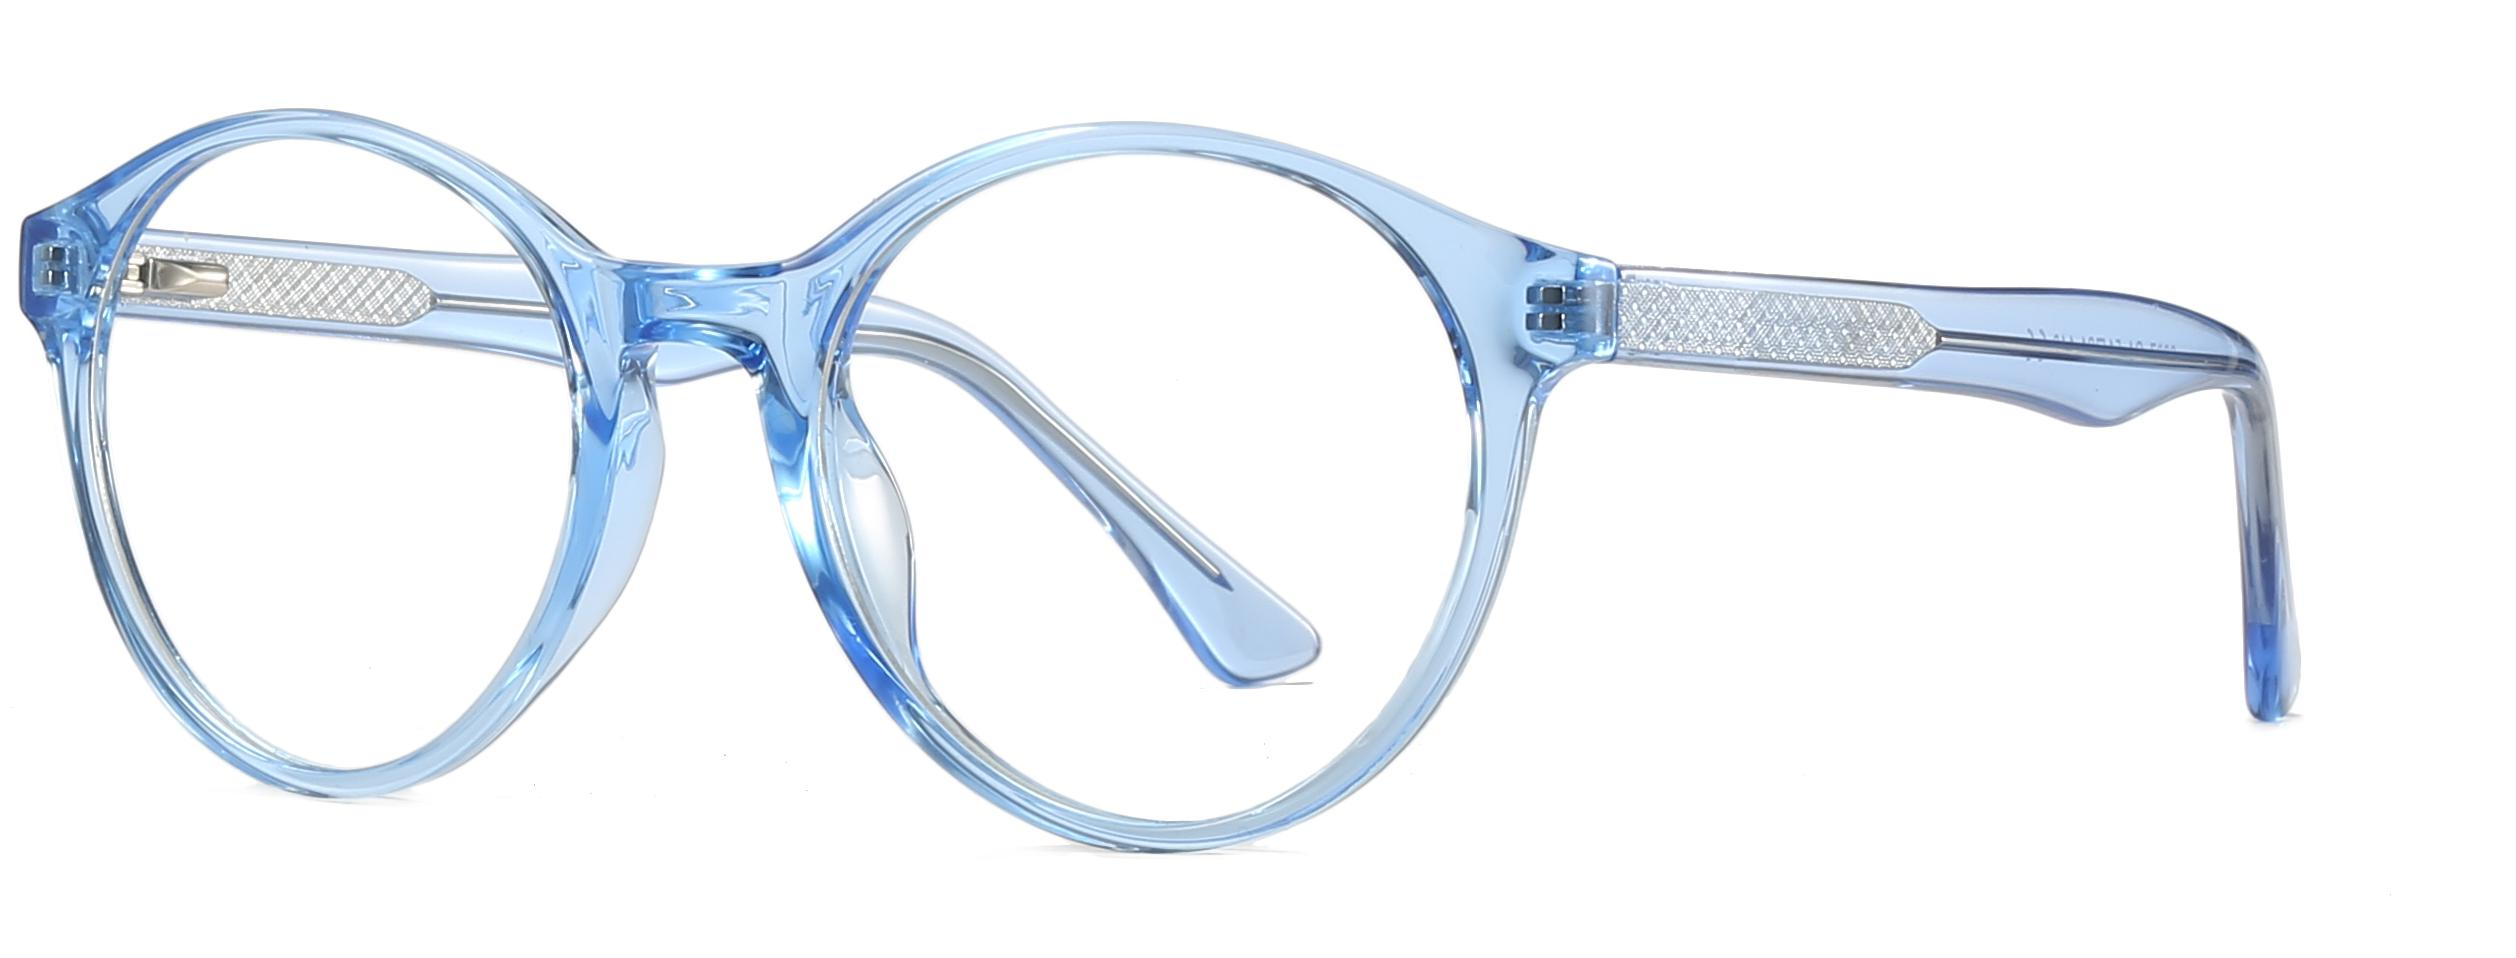 Forma redonda redonda TR90+CP Lentes de luz Anti-azul mulheres quadro óptico #2007